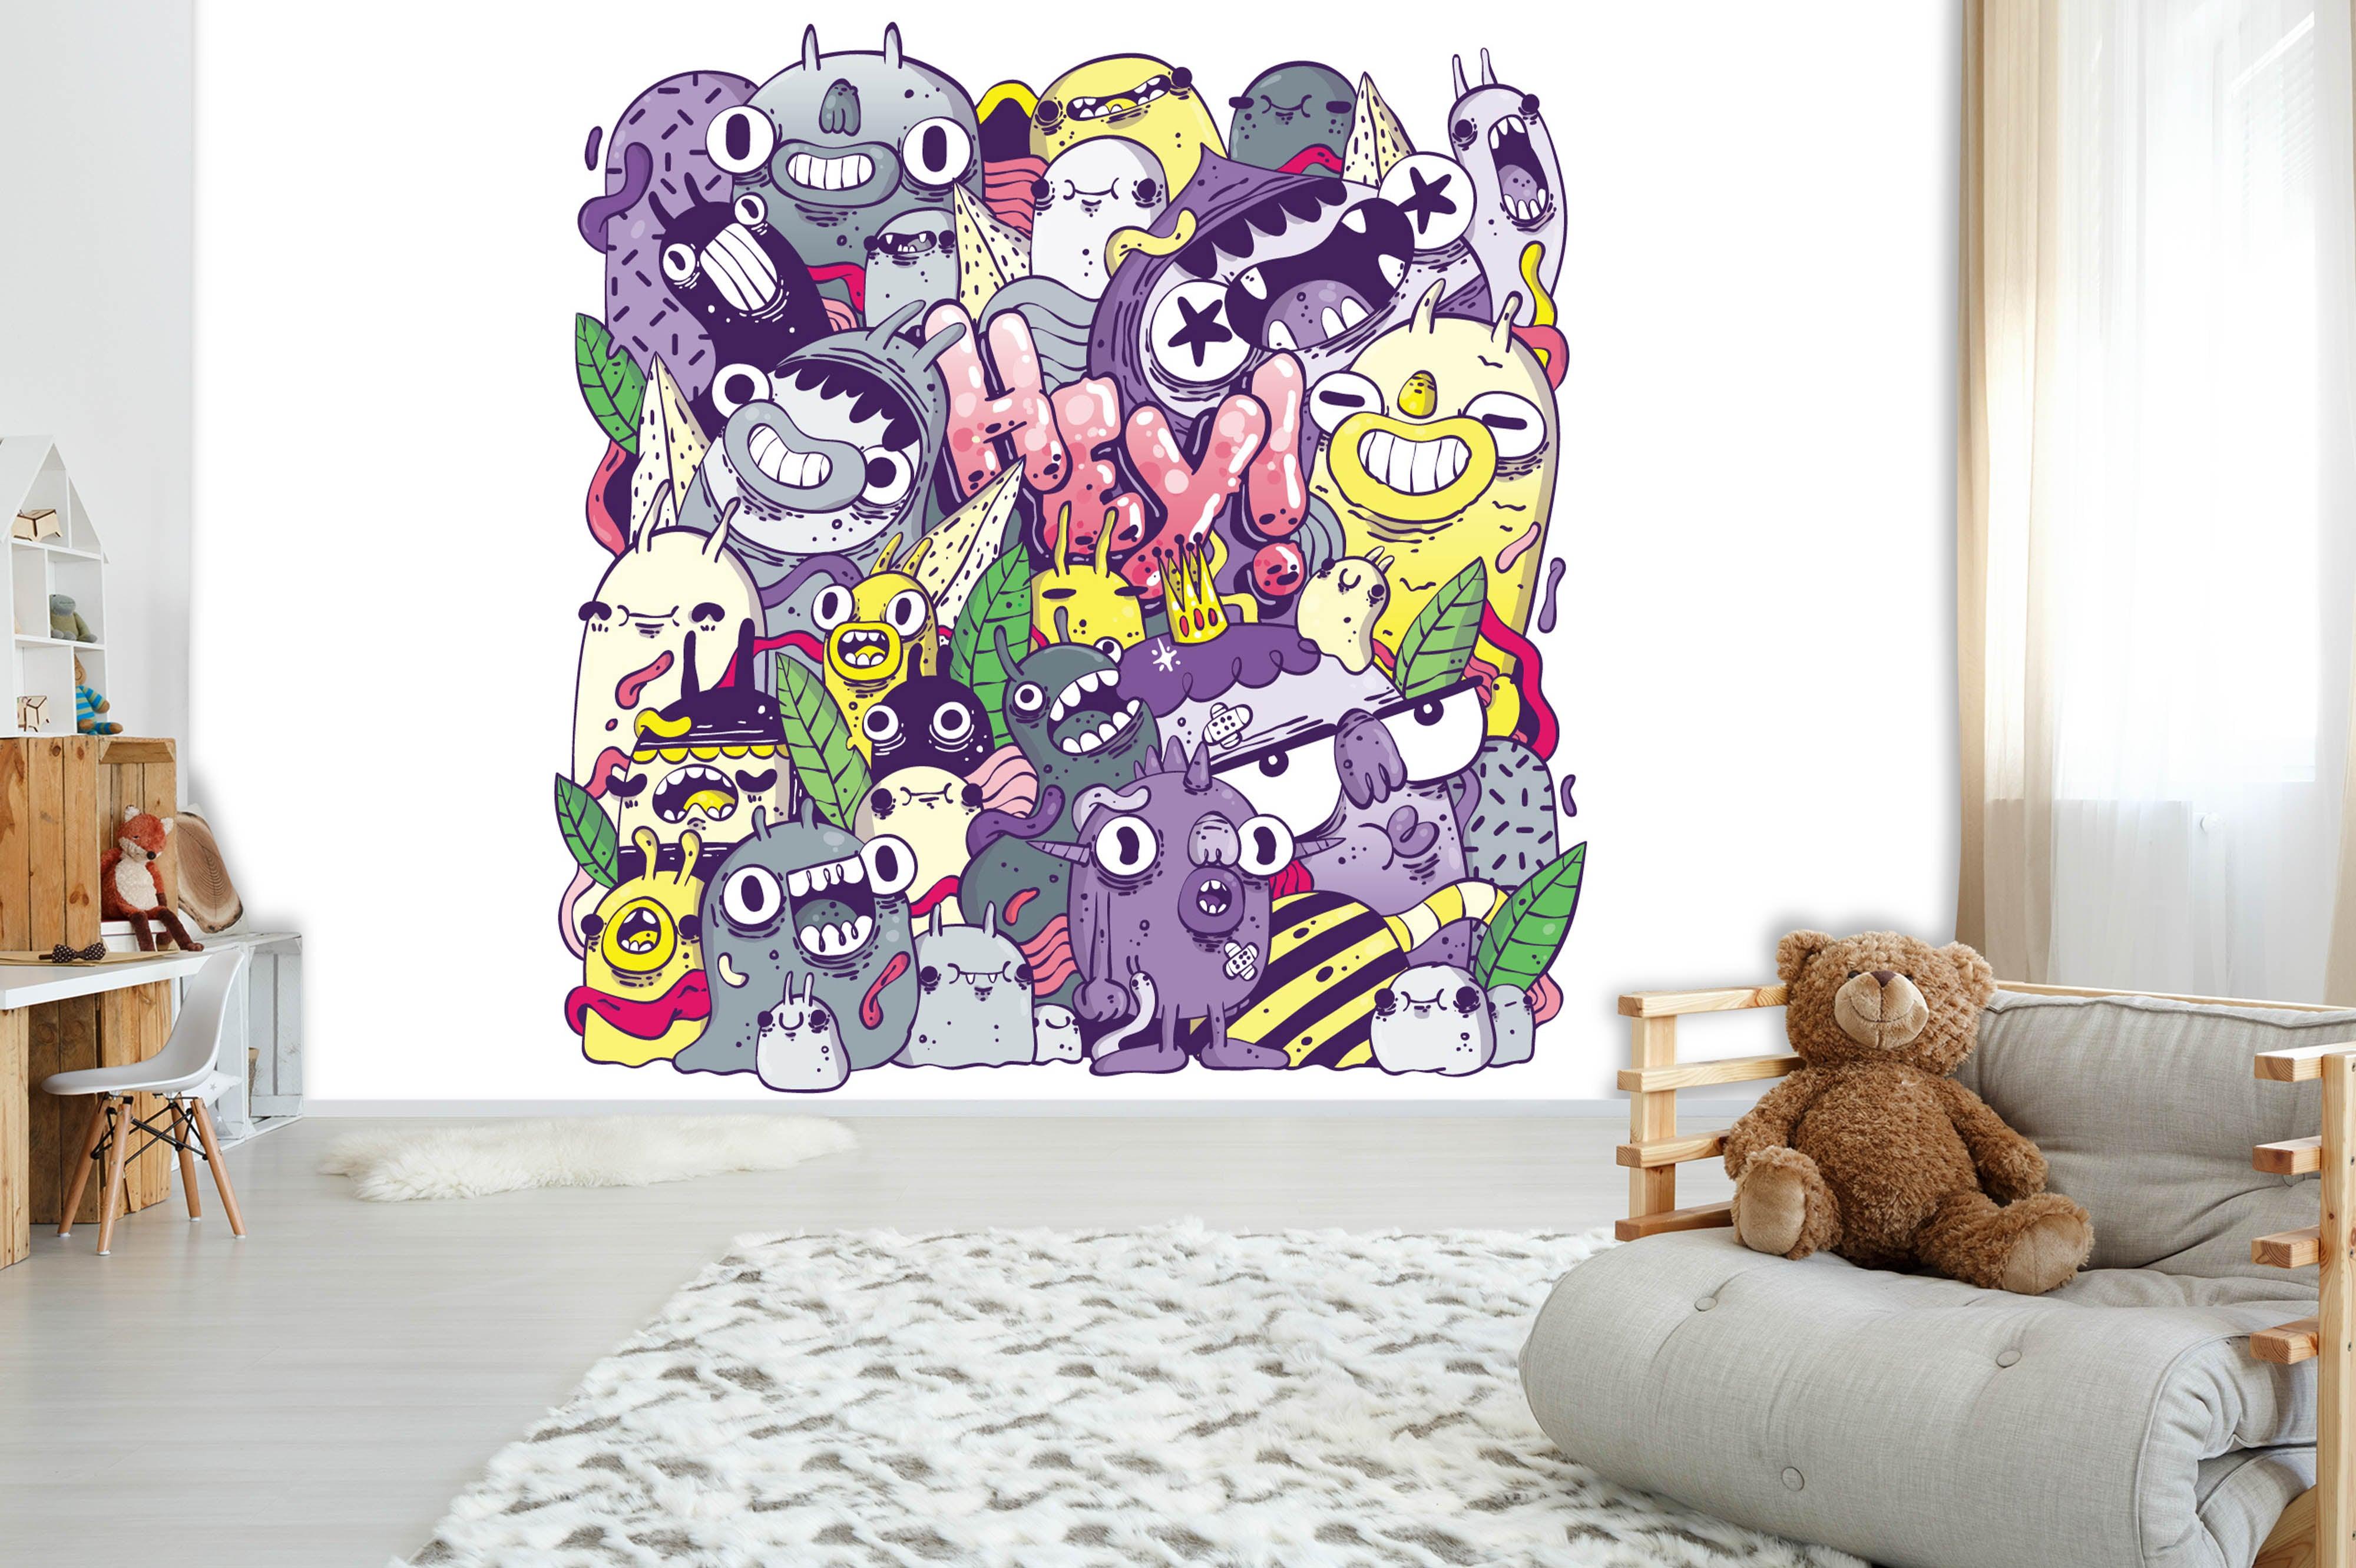 3D Abstract Monster Family Wall Mural Wallpaper 249- Jess Art Decoration